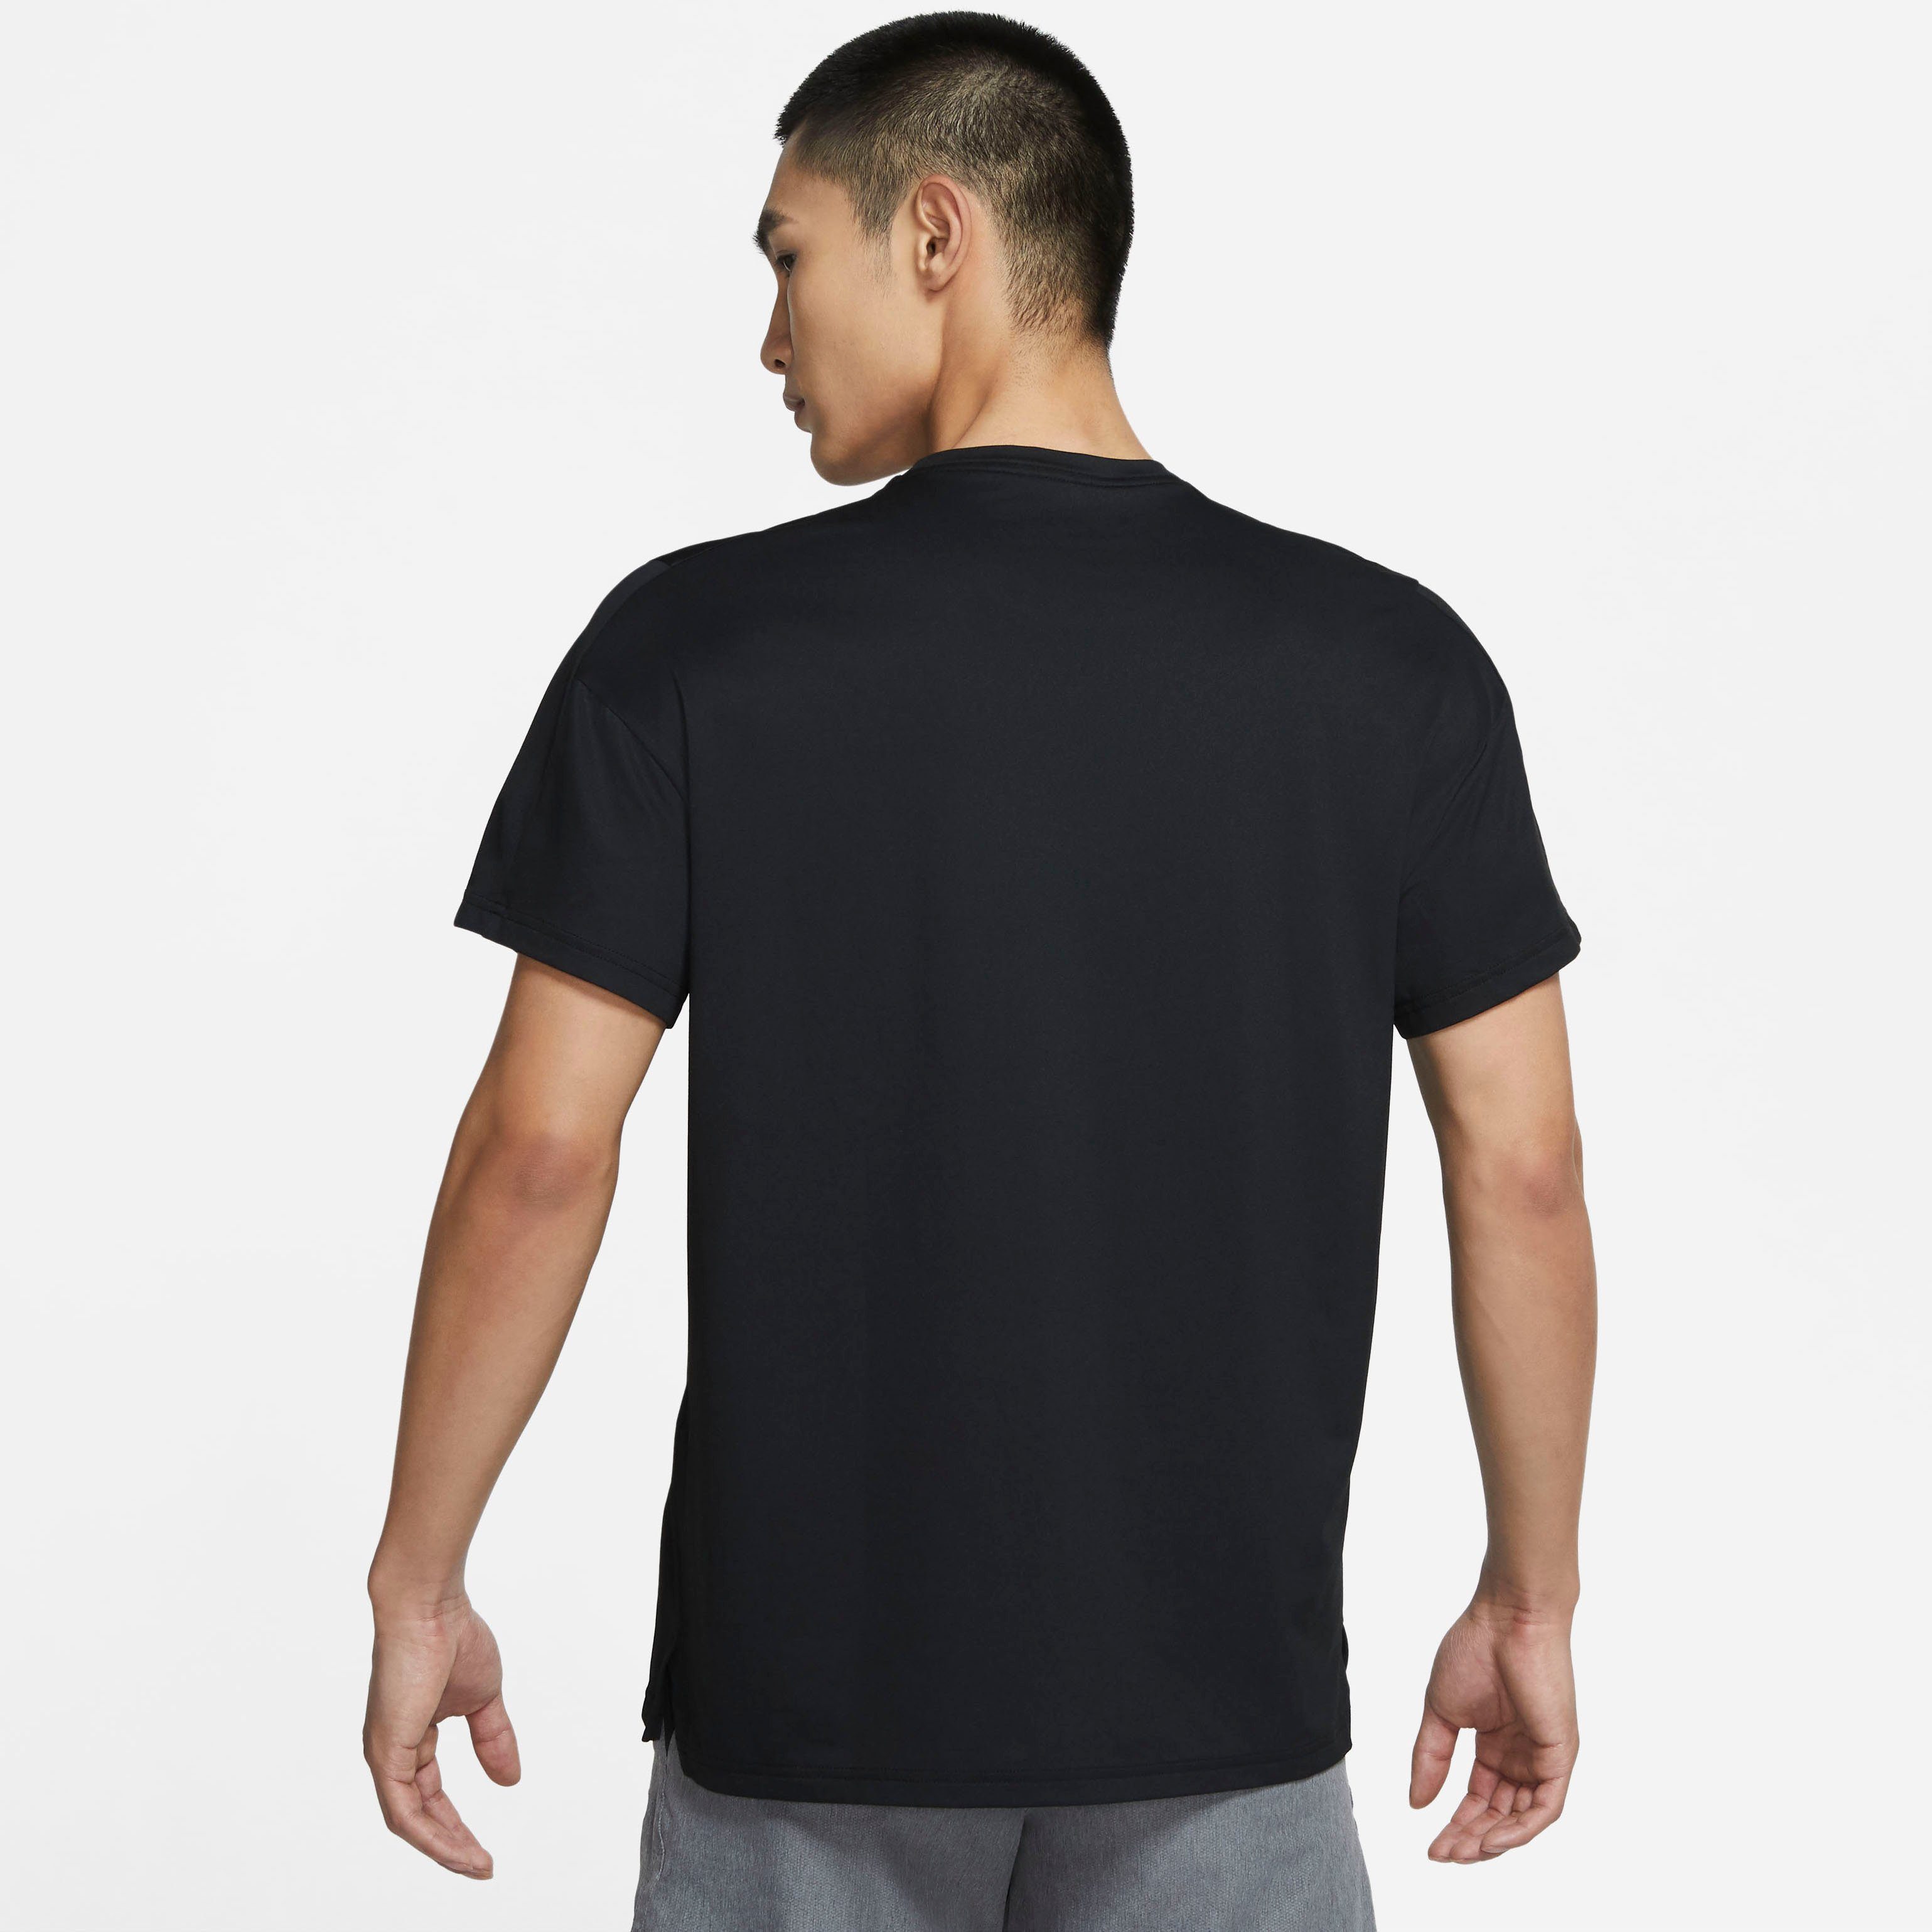 PRO T-Shirt DRI-FIT Nike